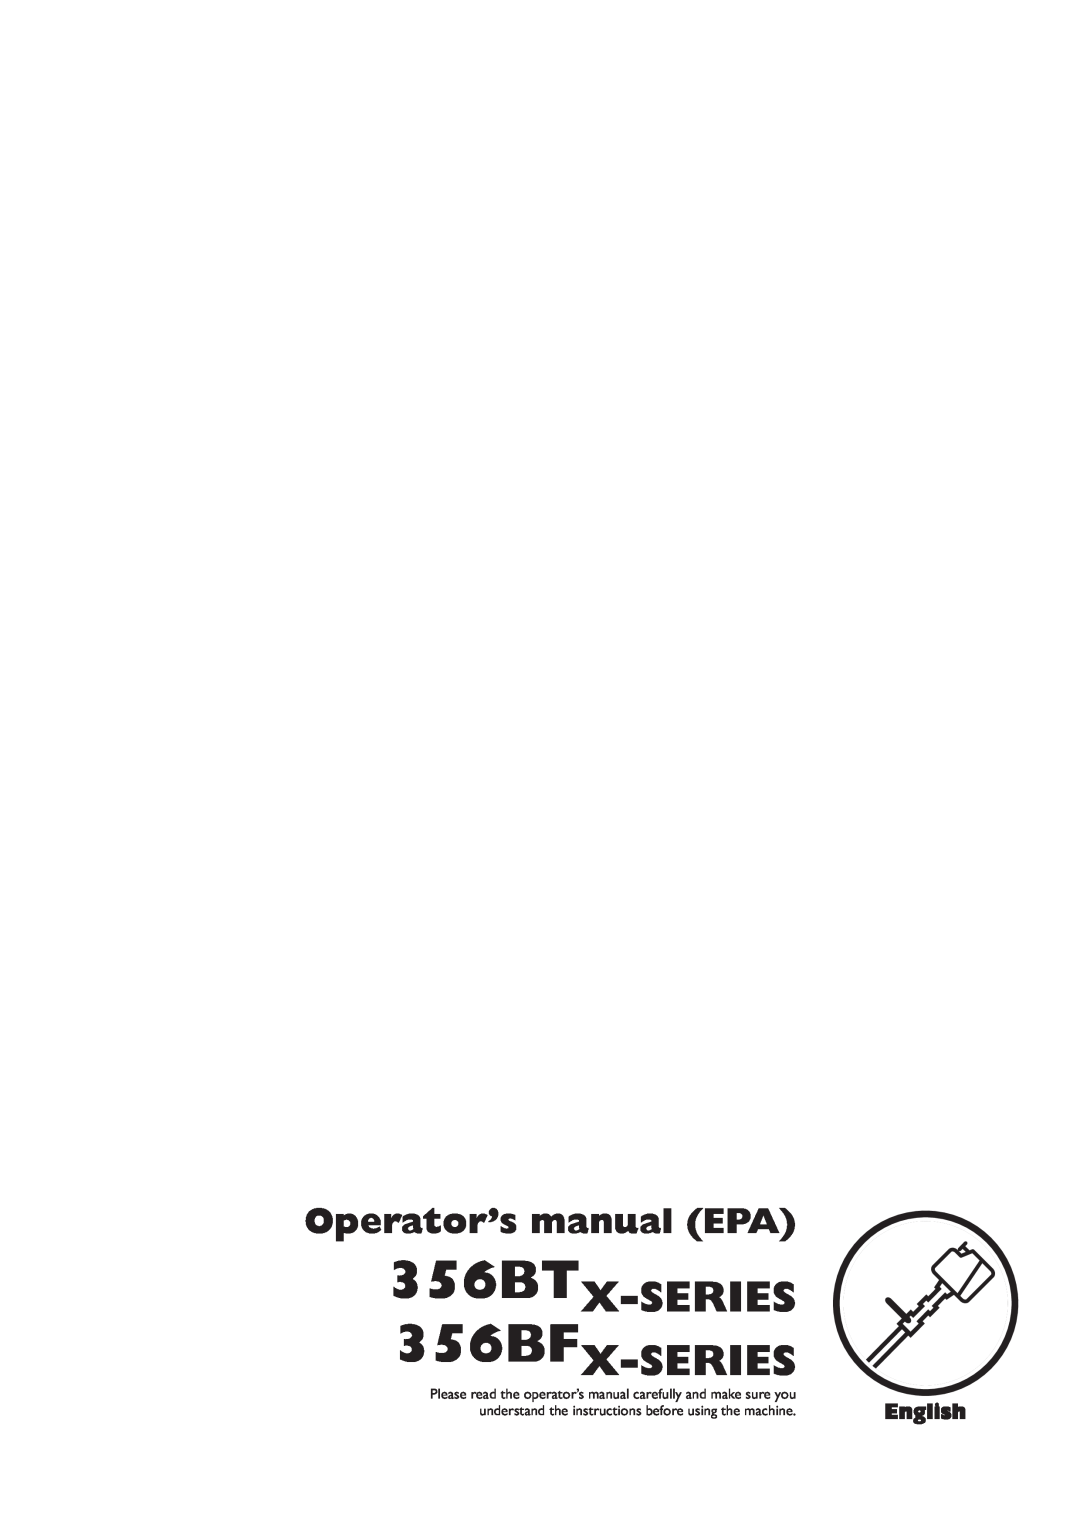 Husqvarna 953210103 manual 356BTX-SERIES 356BFX-SERIES, Operator’s manual EPA, English 